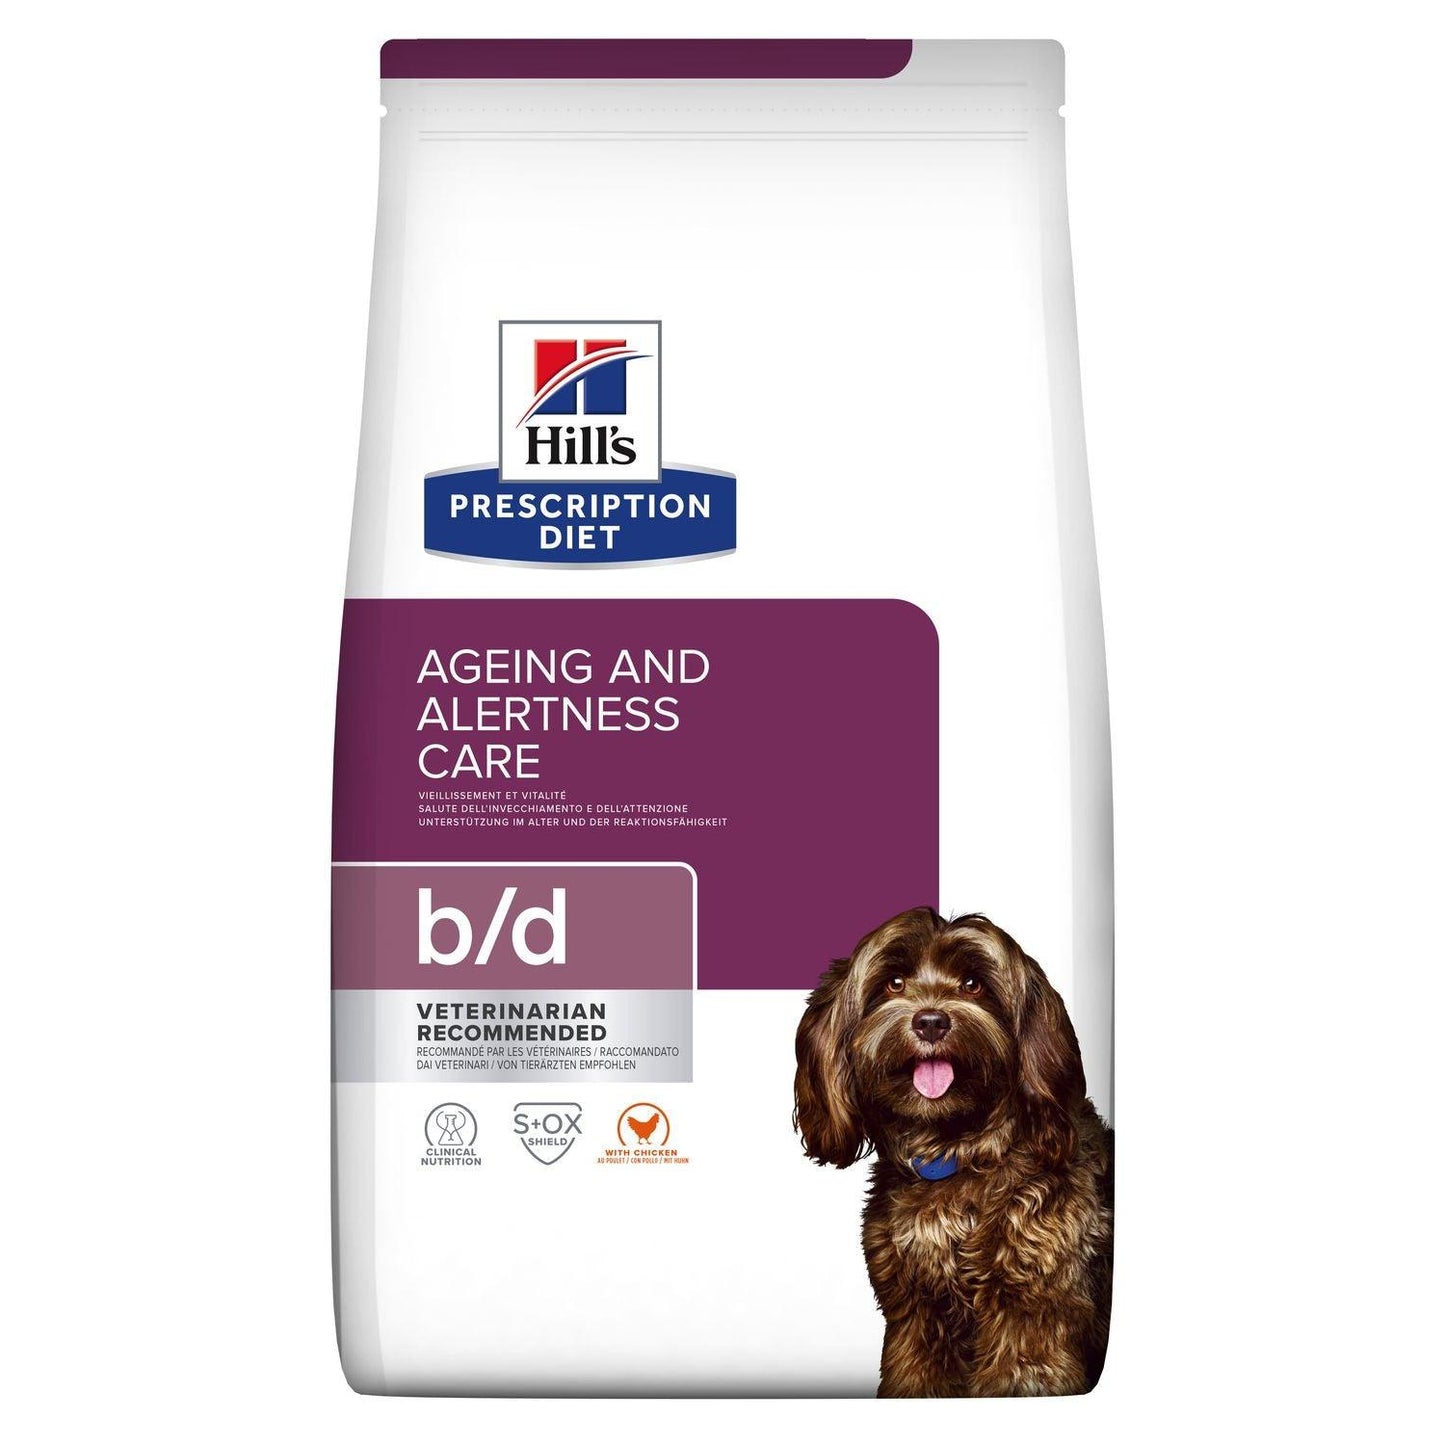 Canine b/d - Hill's Prescription Diet - Alter:Senior, Erkrankung:Hirn, Futterart:Trocken, Geschmack:Huhn, Tierart:Hund - Marigin AG Onlineshop für Tierbedarf